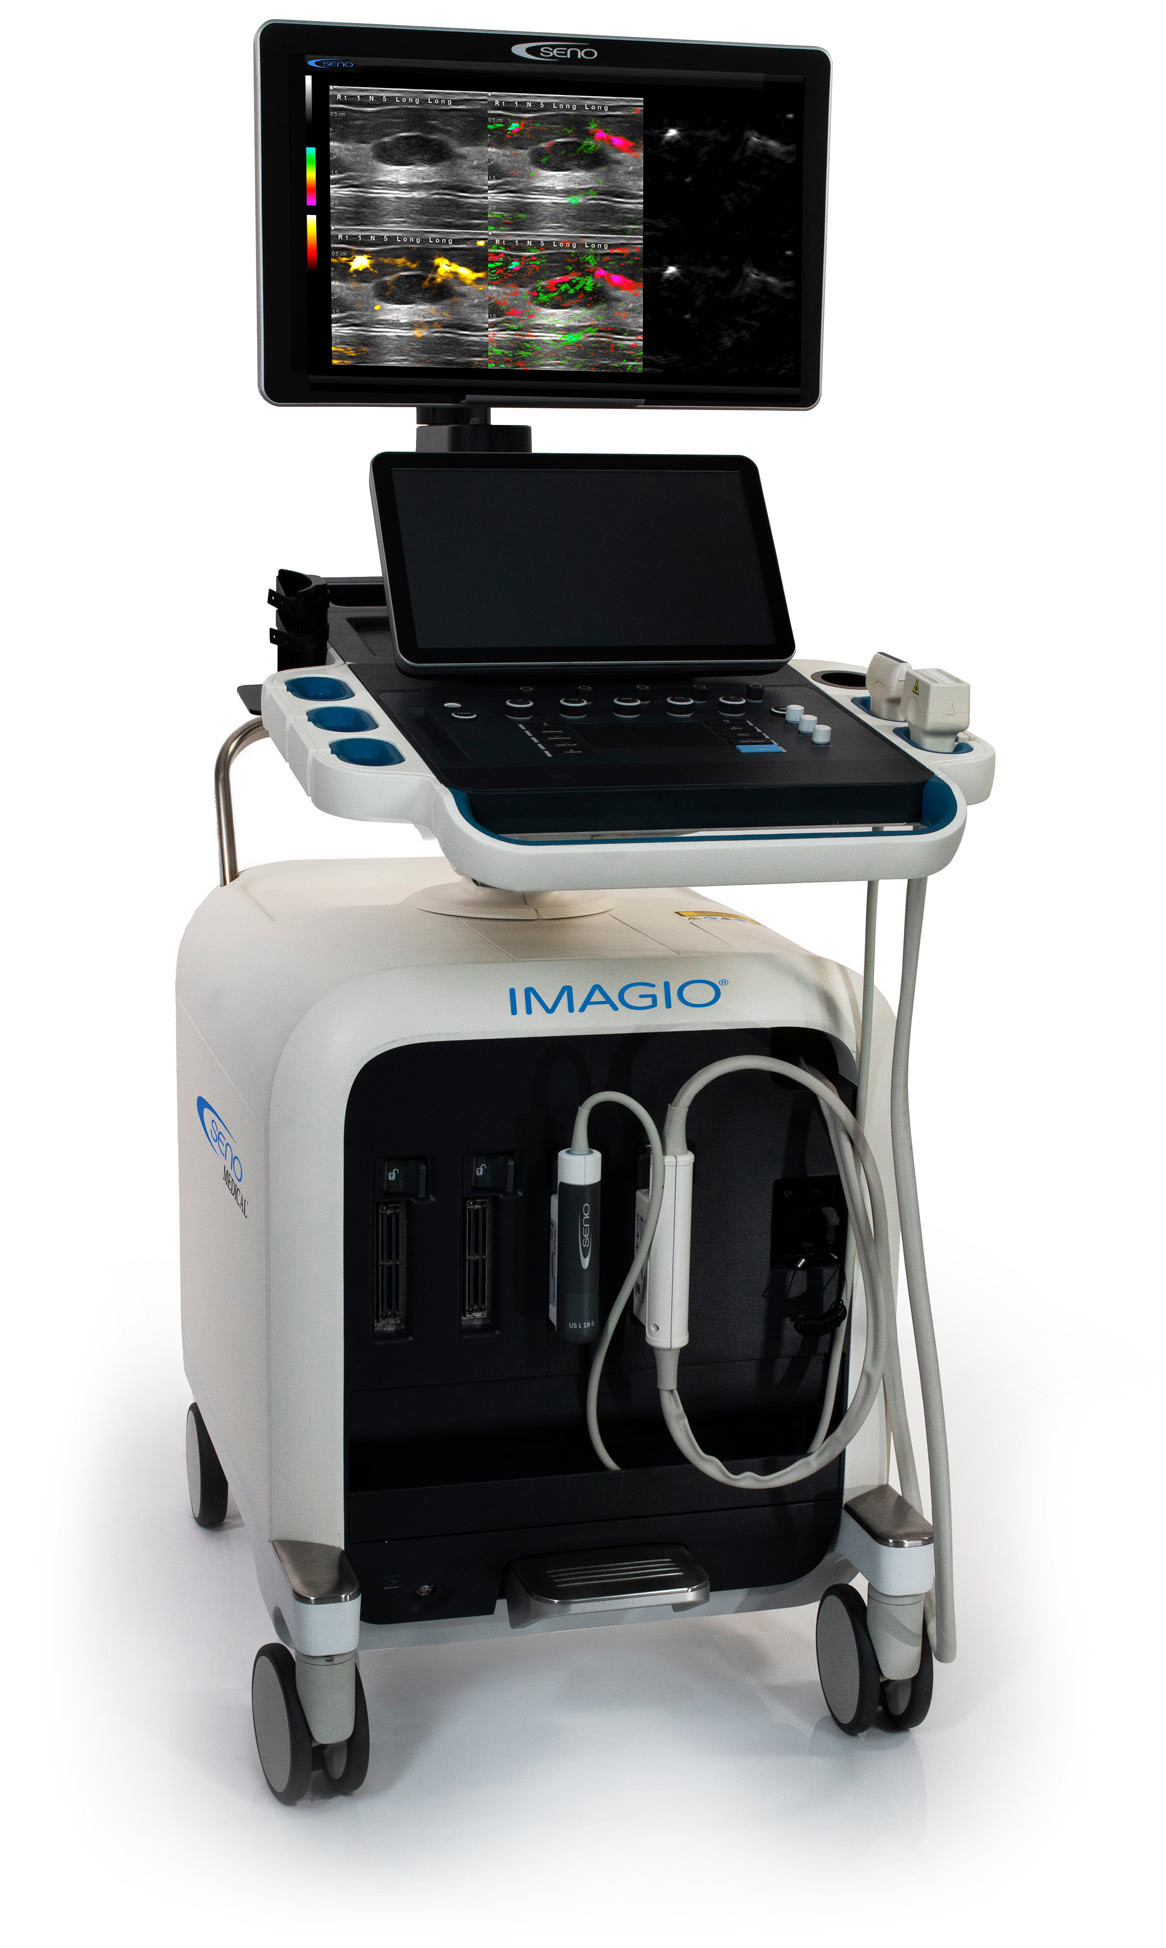 Imagio® OA/US Breast Imaging System Full Image Gen 2